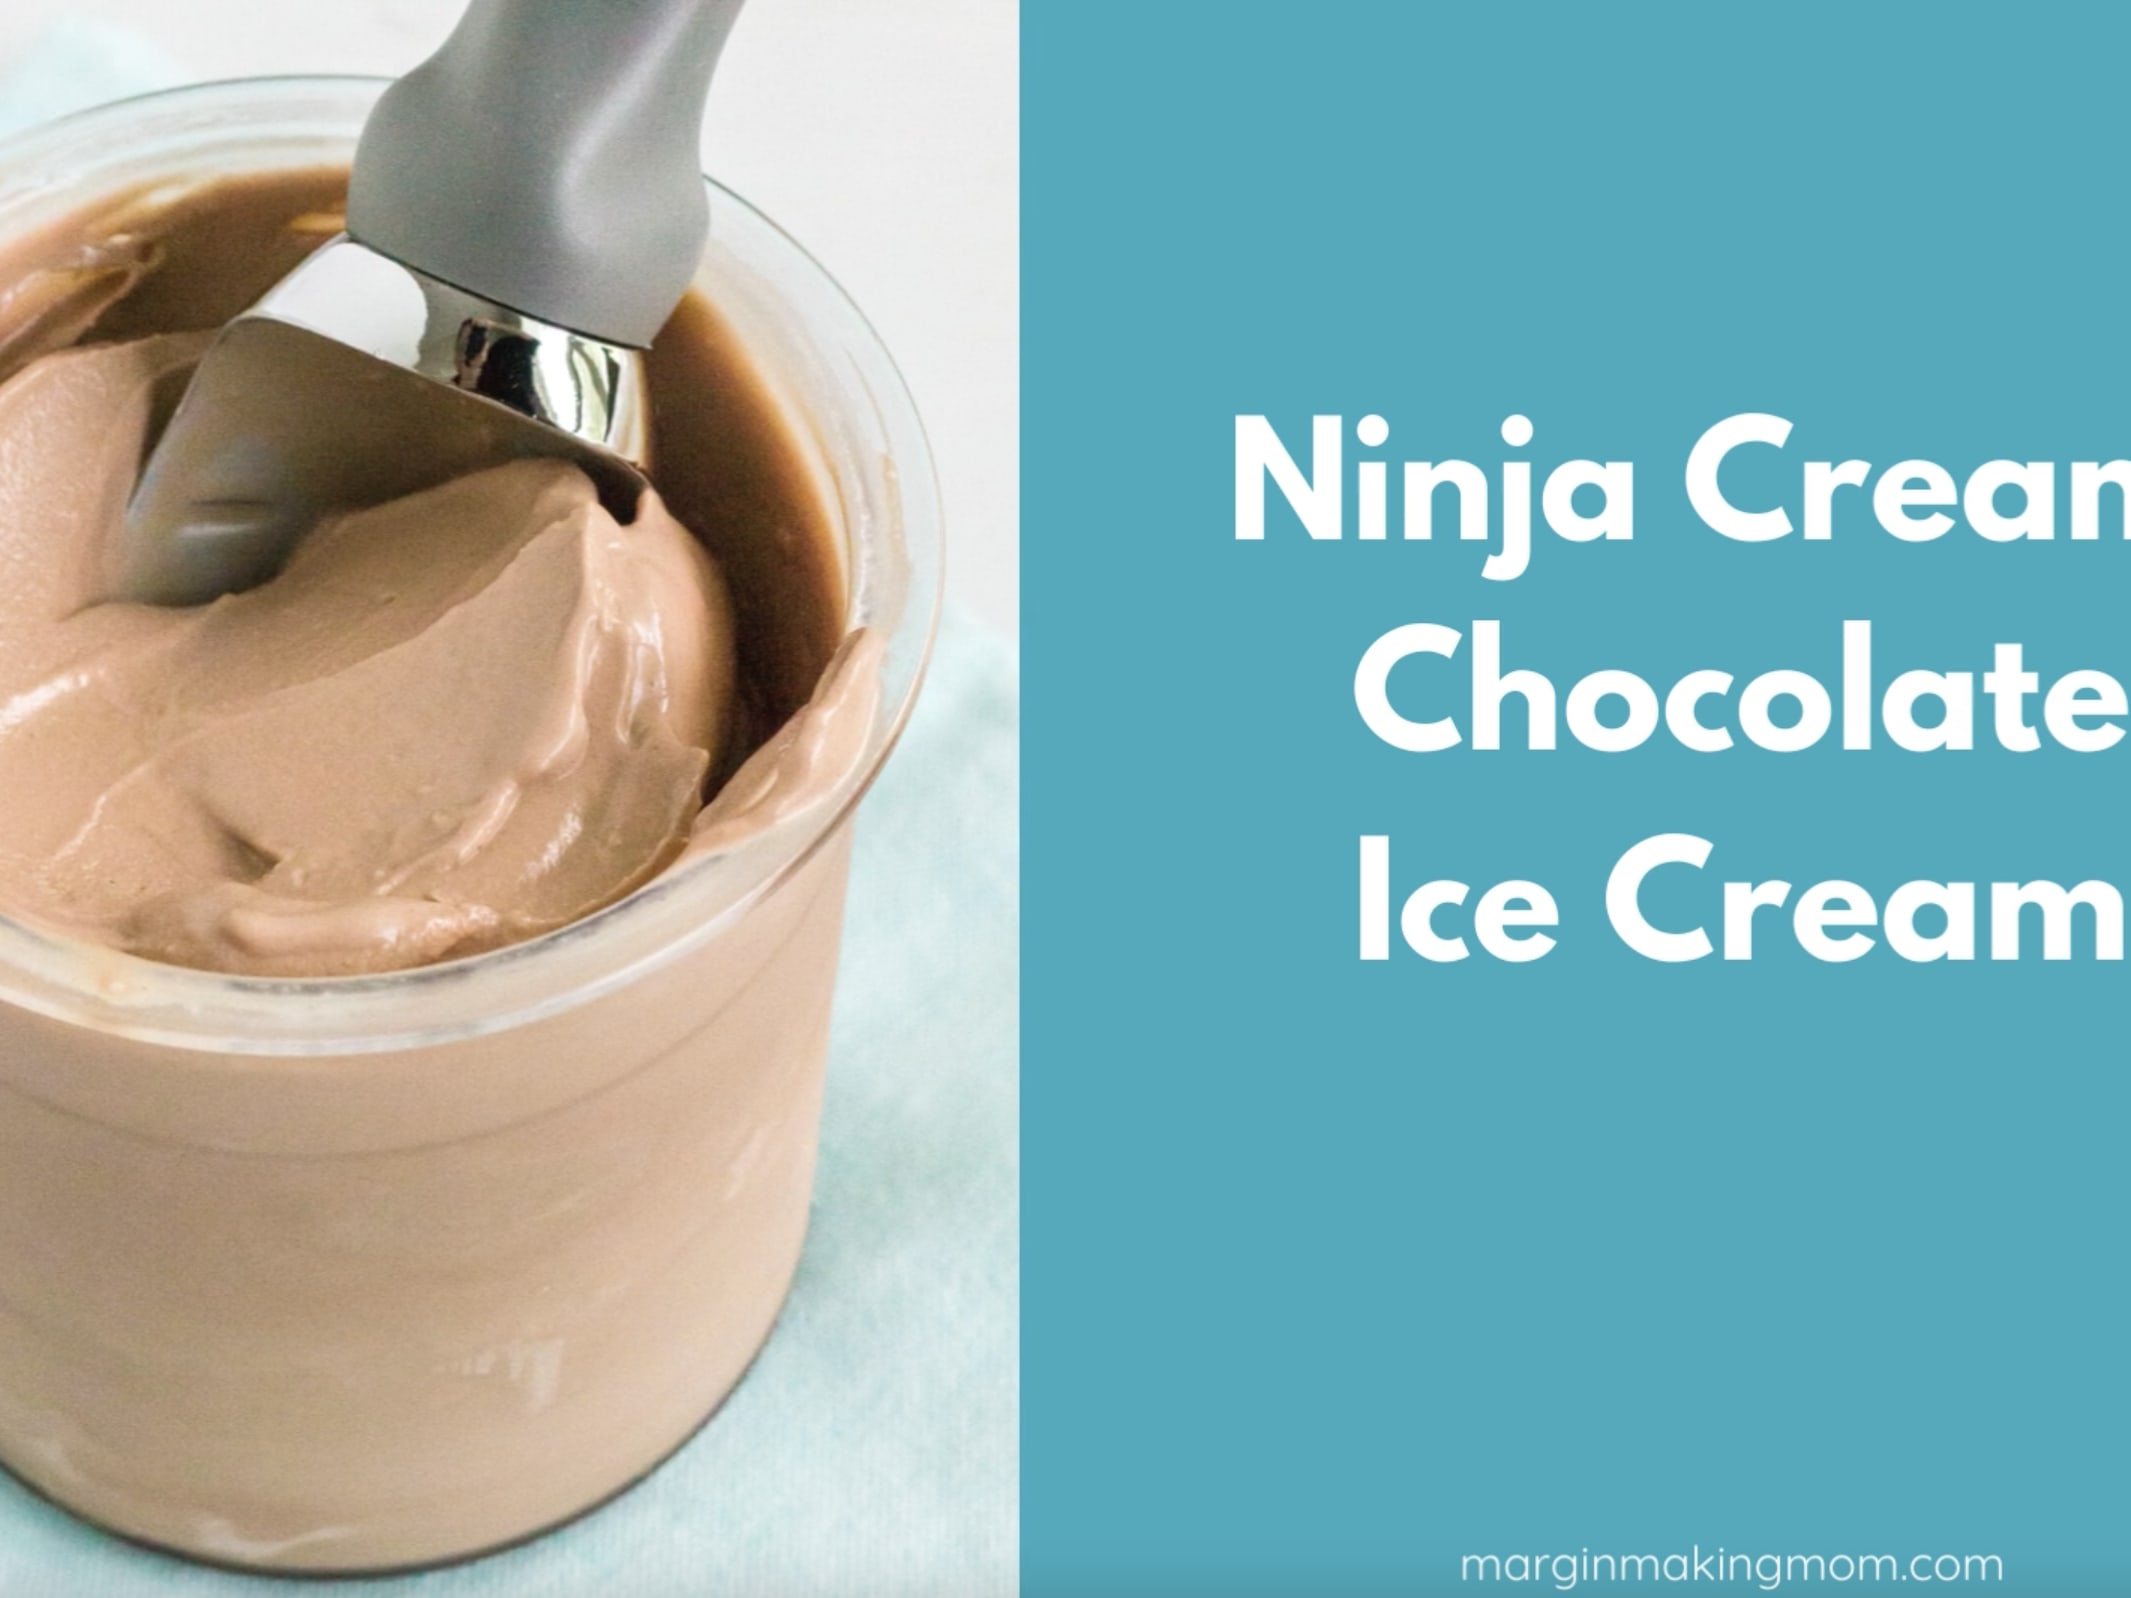 Ninja Creami Chocolate Ice Cream - The Midwest Kitchen Blog